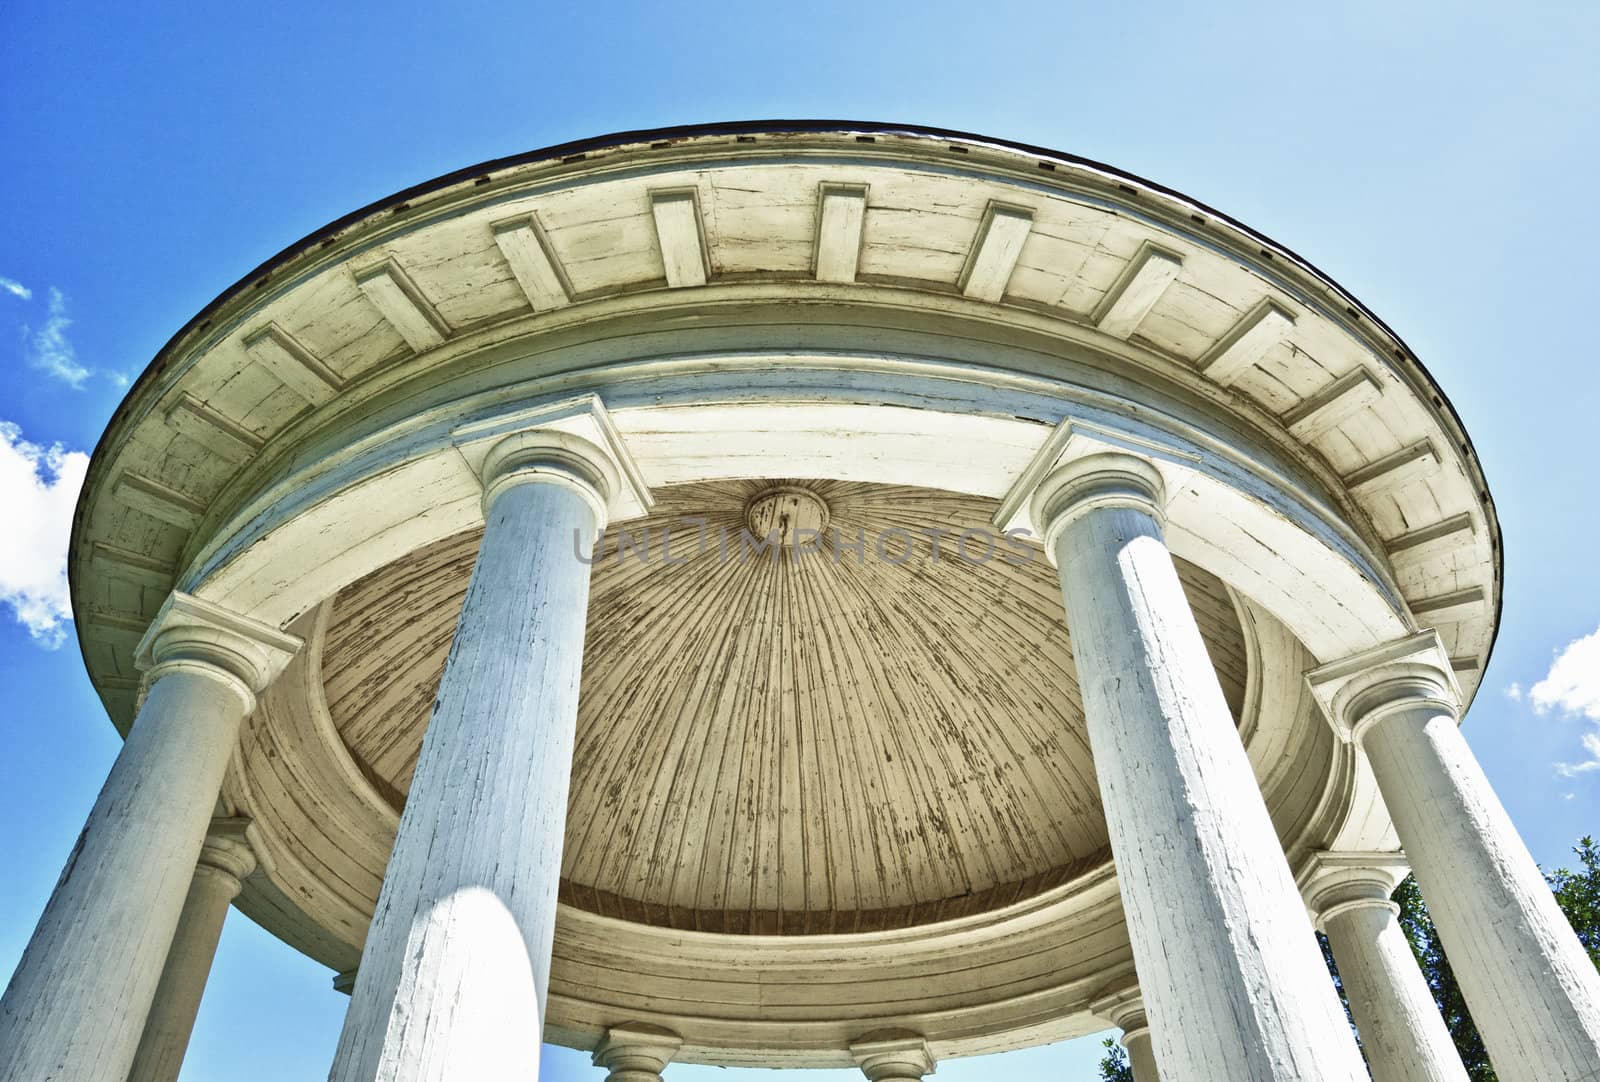 classical circular temple in garden, blue sky background